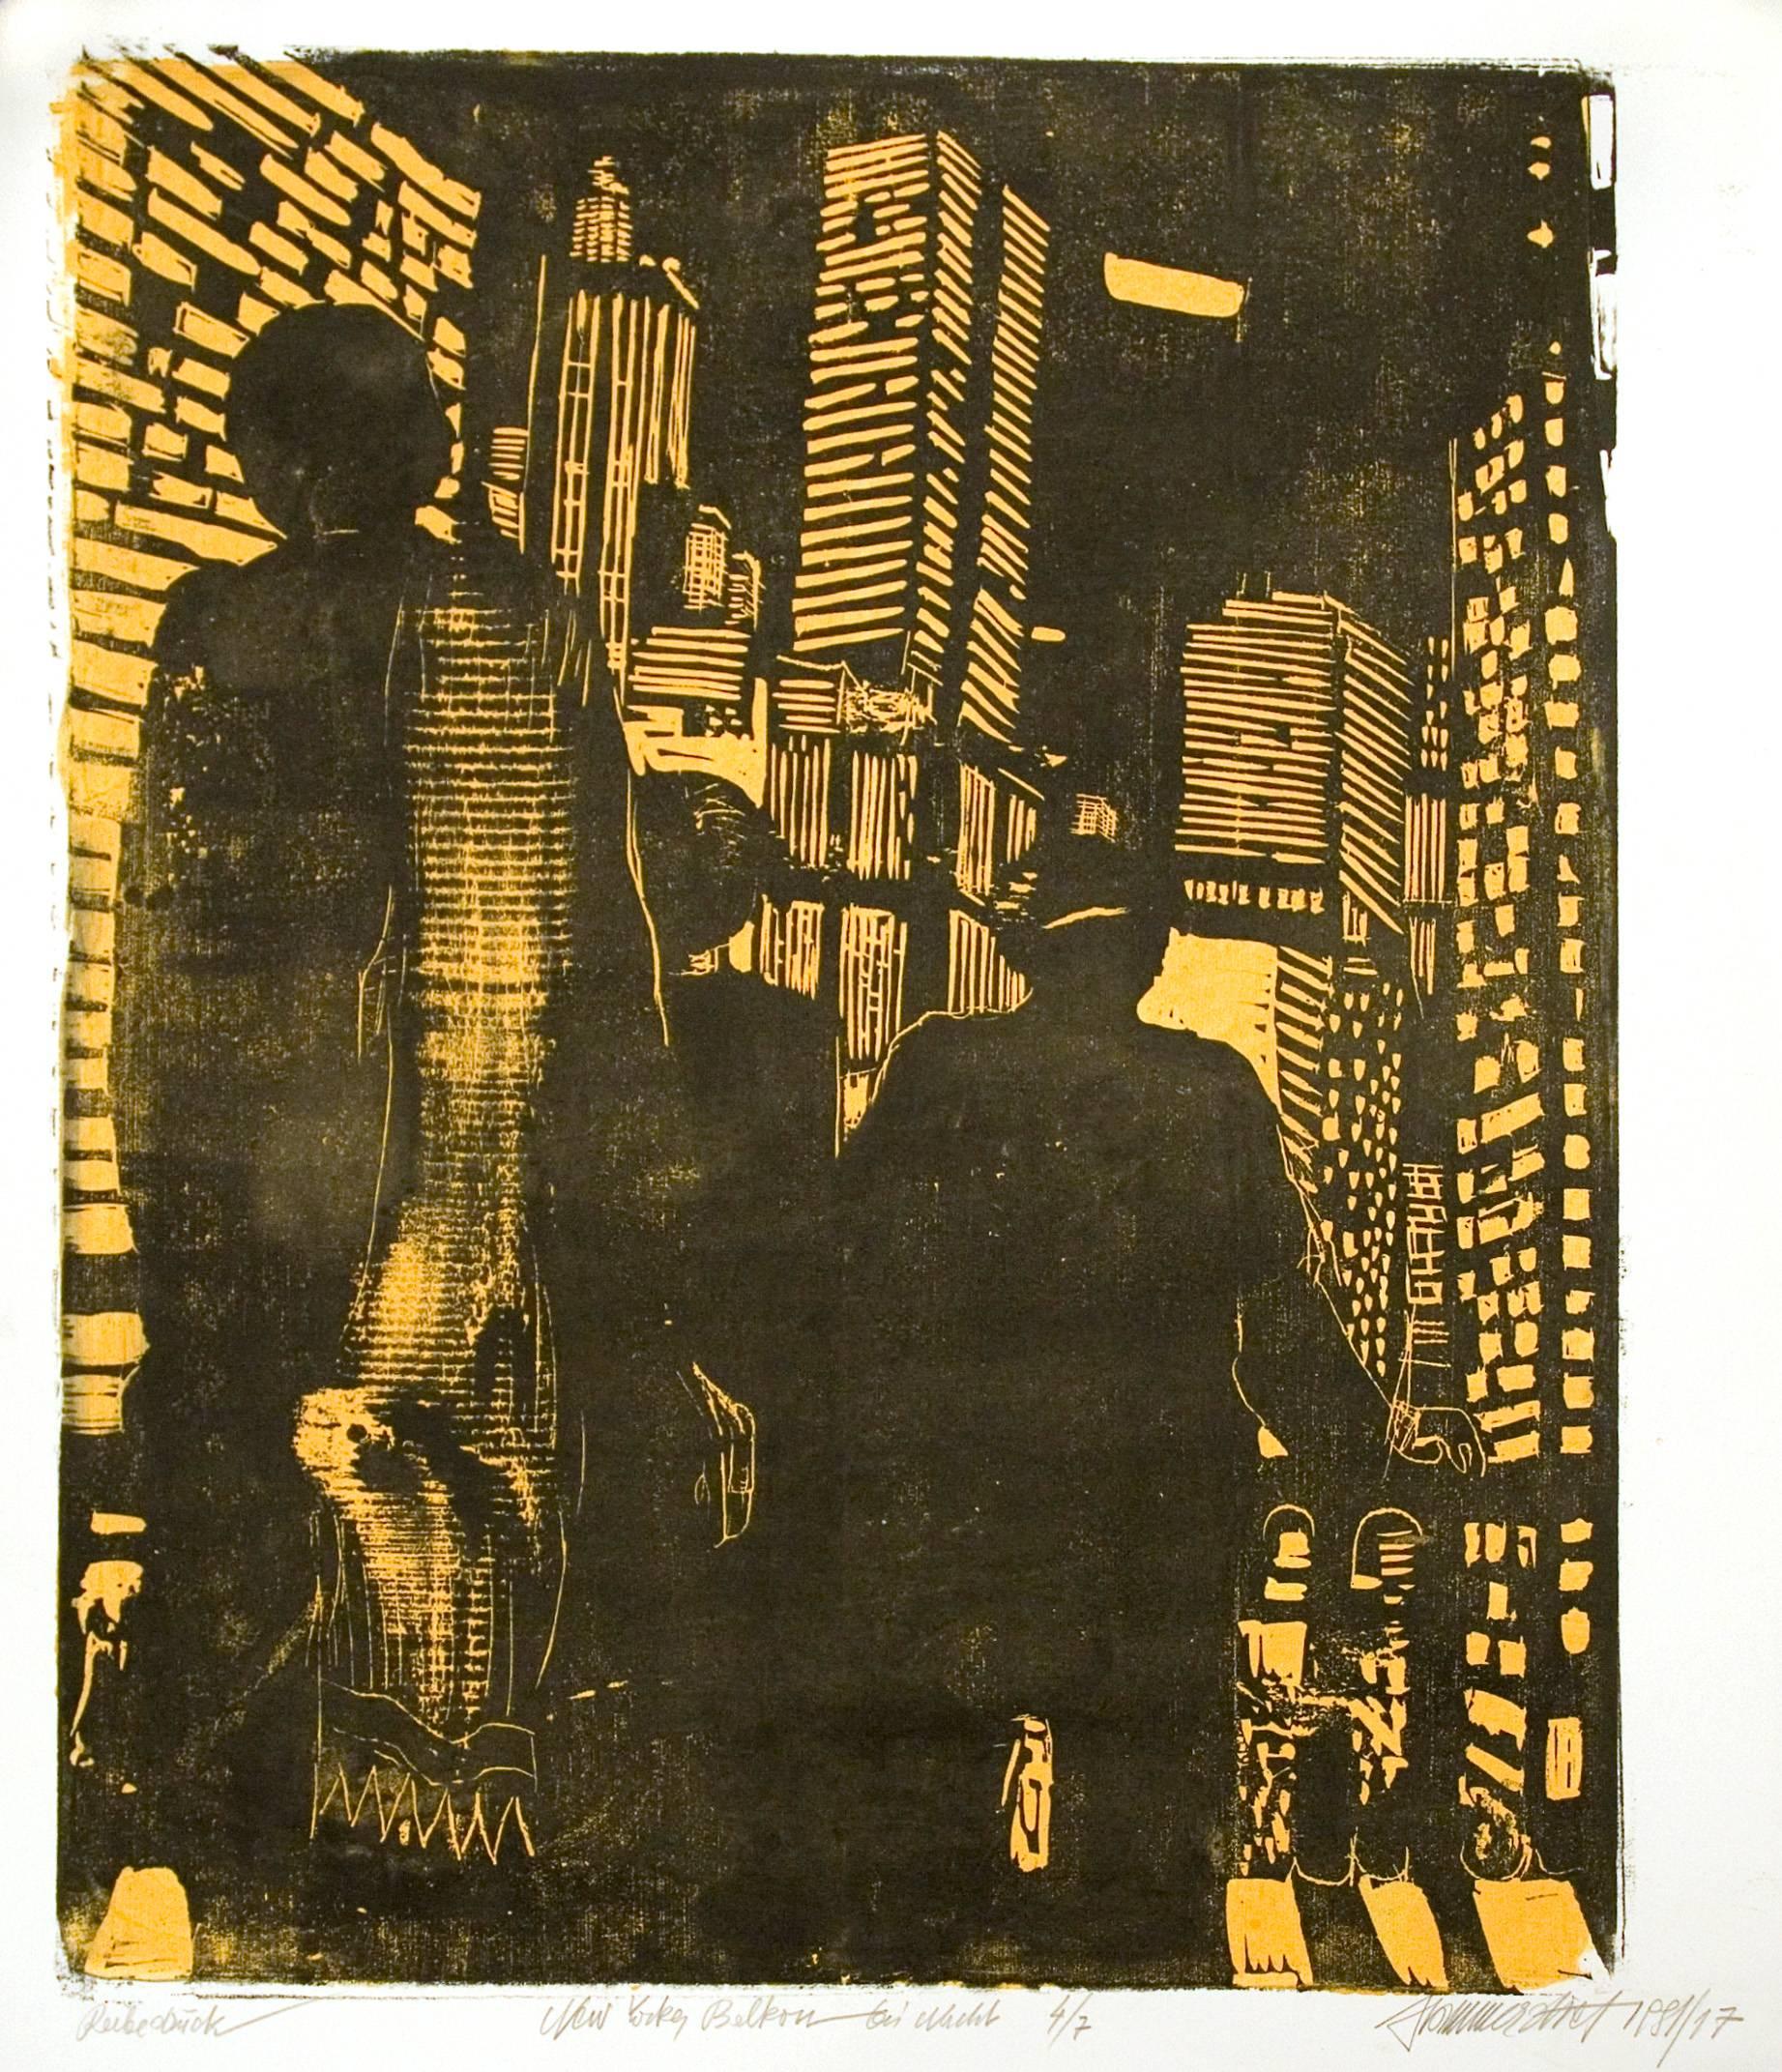 New York Balkony at Night 4/7 - Print by Robert Hammerstiel